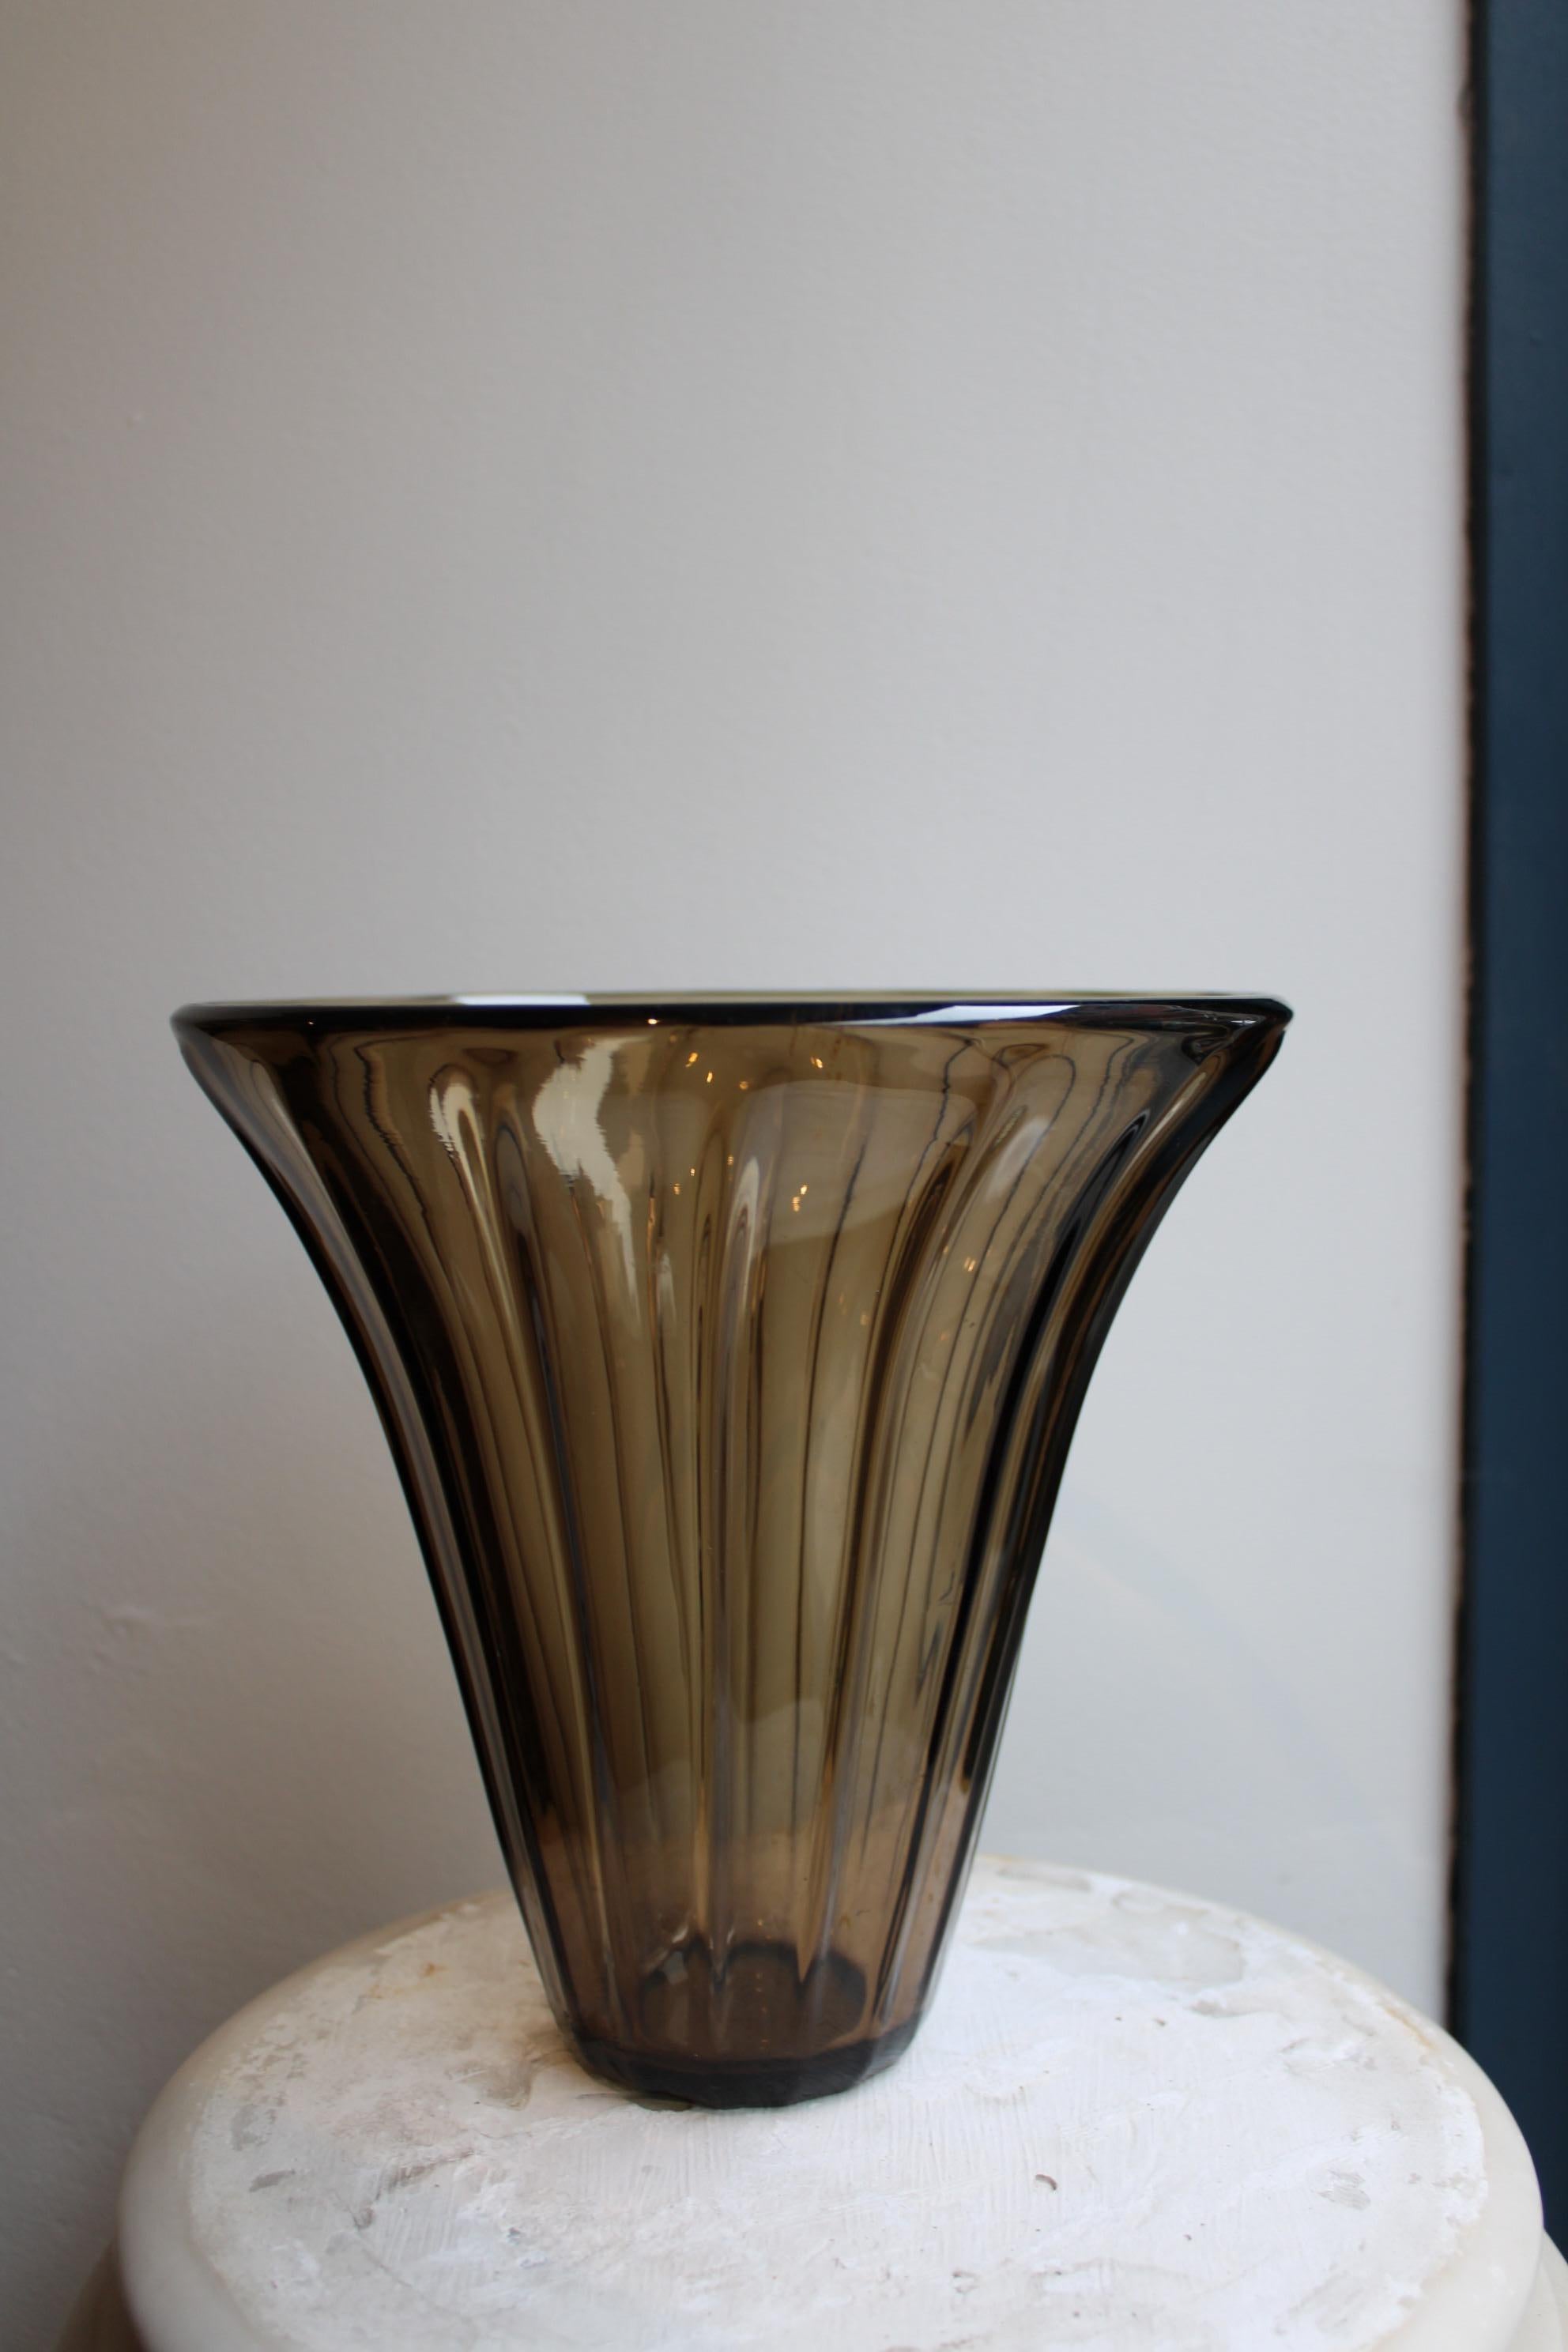 Daum smoked glass vase
Engraved signature Daum Nancy France, cross of Lorraine
Art Déco
France, 20th century.

Base diameter 7.5 cm
Diameter 21 cm
Height 20 cm